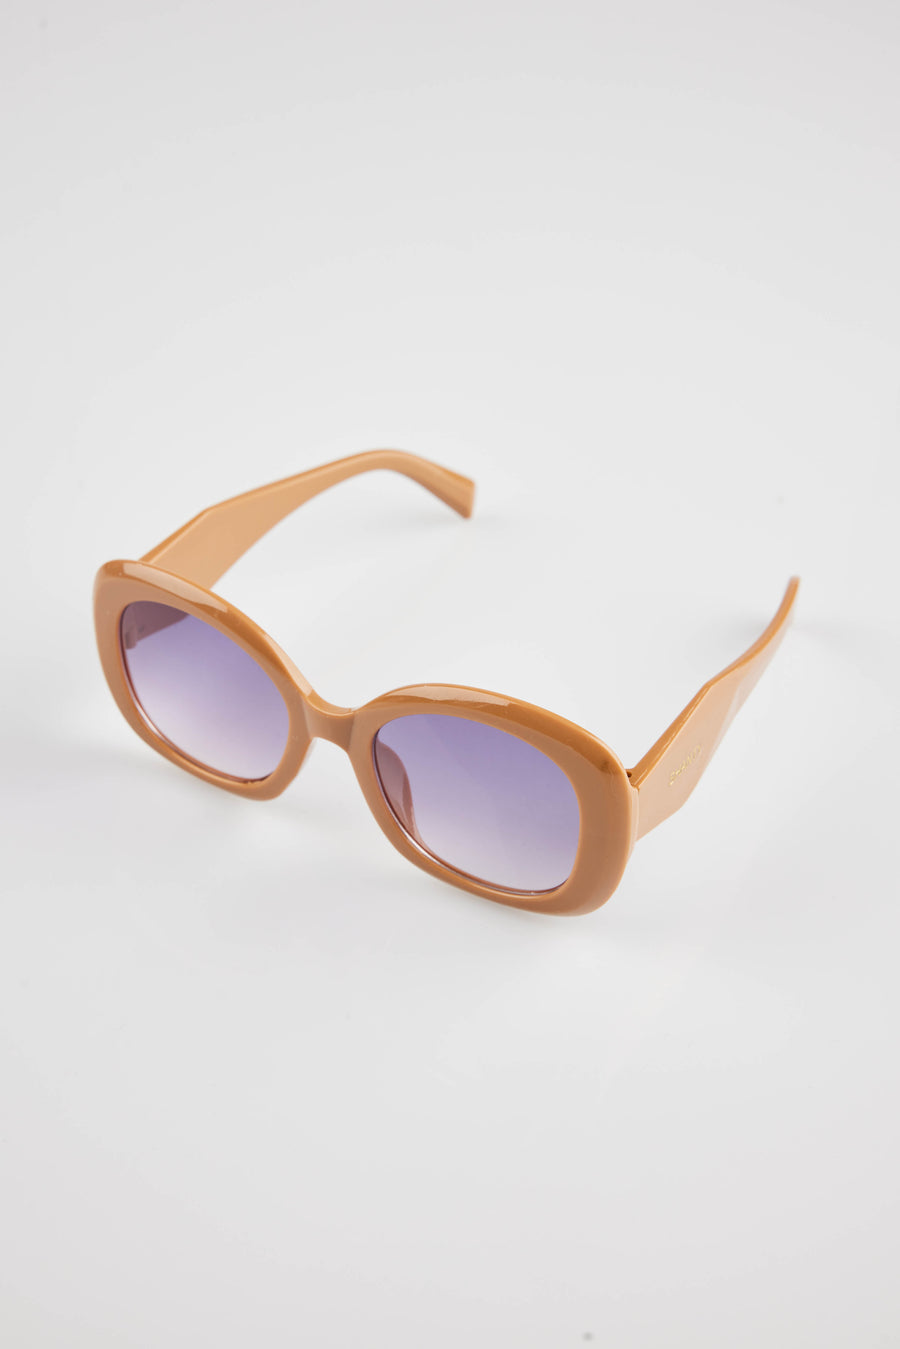 Zhivago Sunglasses - Caramel